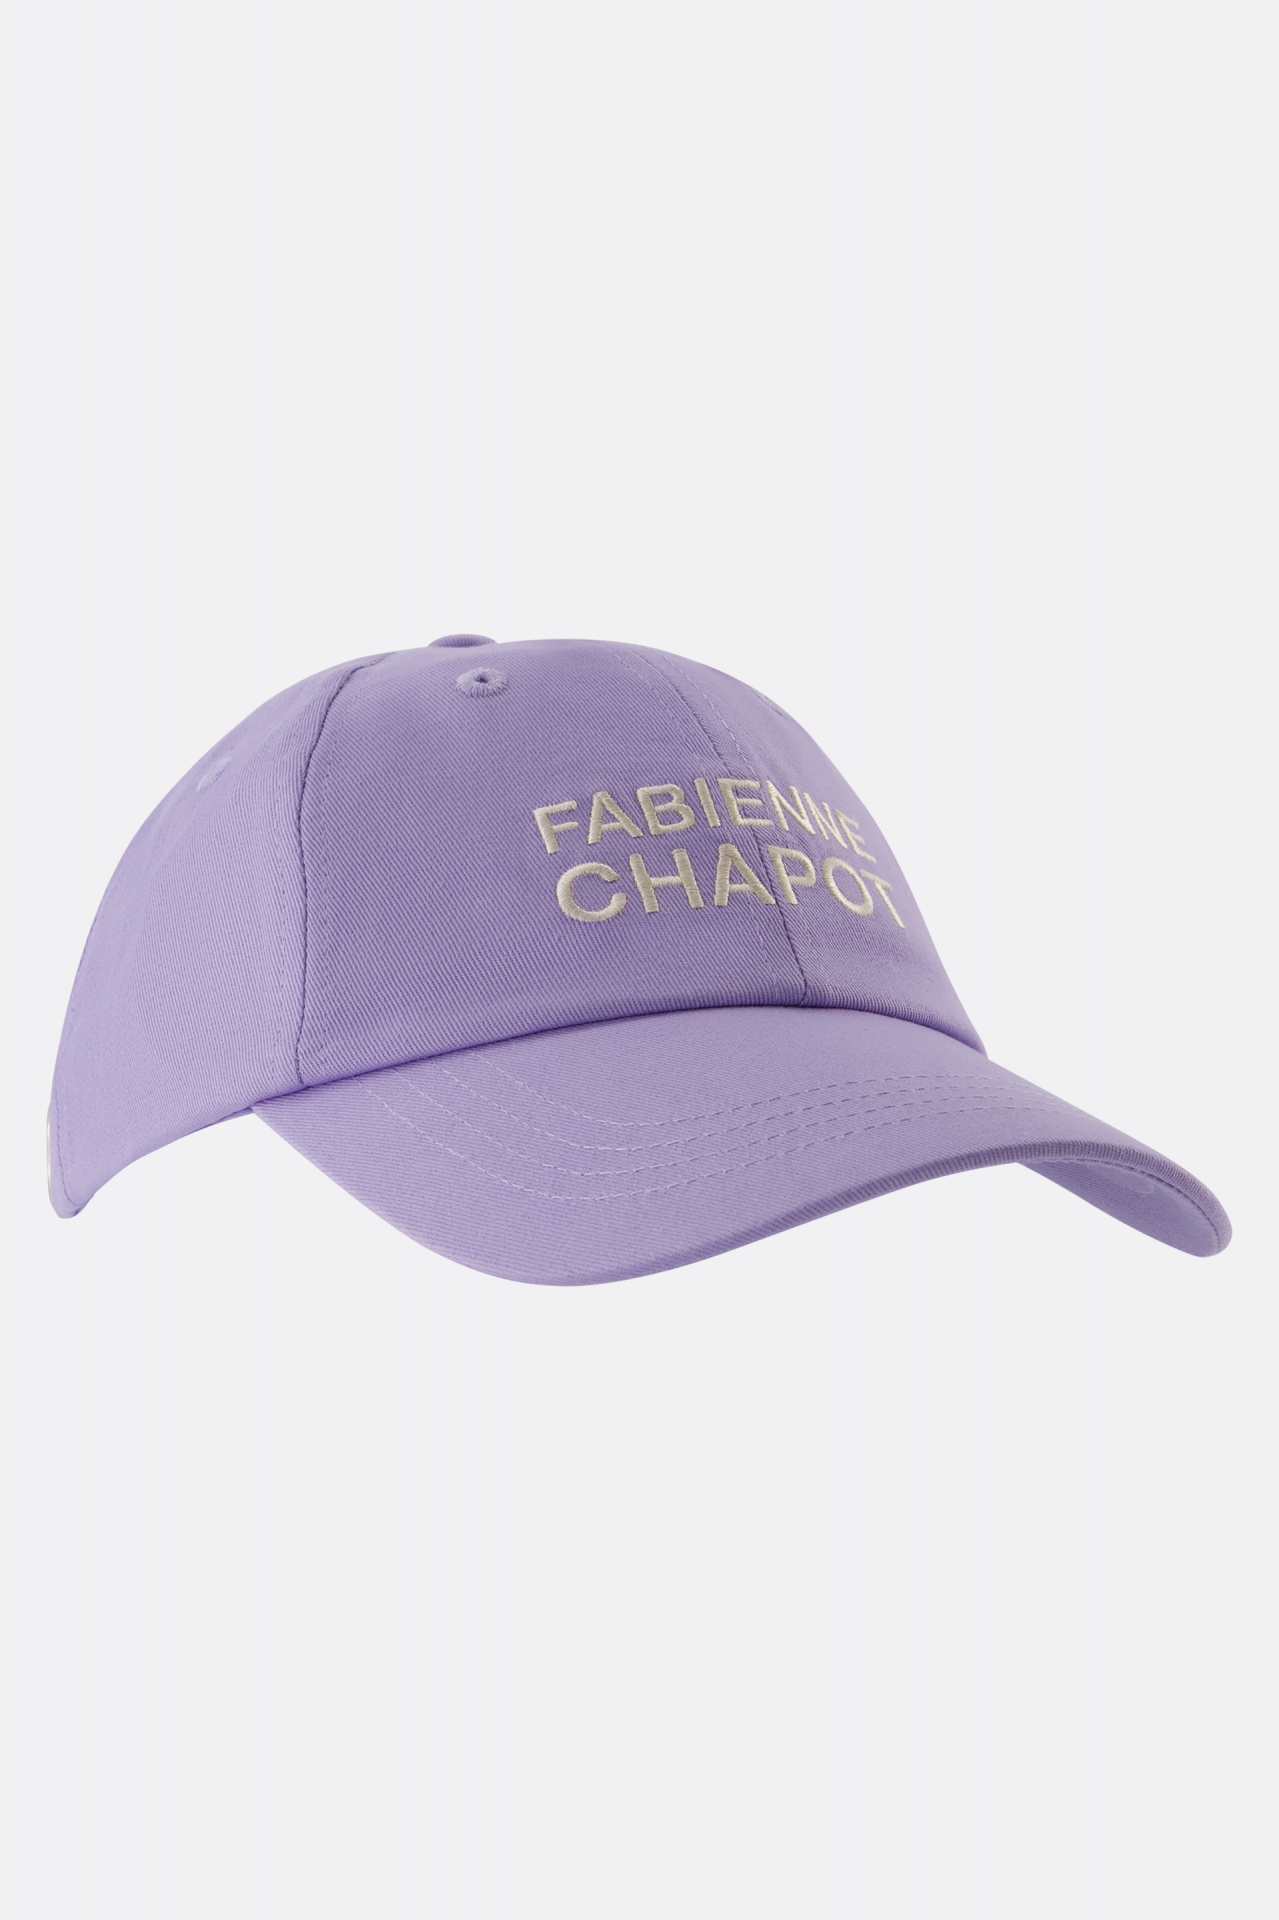 FABIENNE CHAPOT CHLOE CAP | Accessoires | DAMES | Hesselink Mode